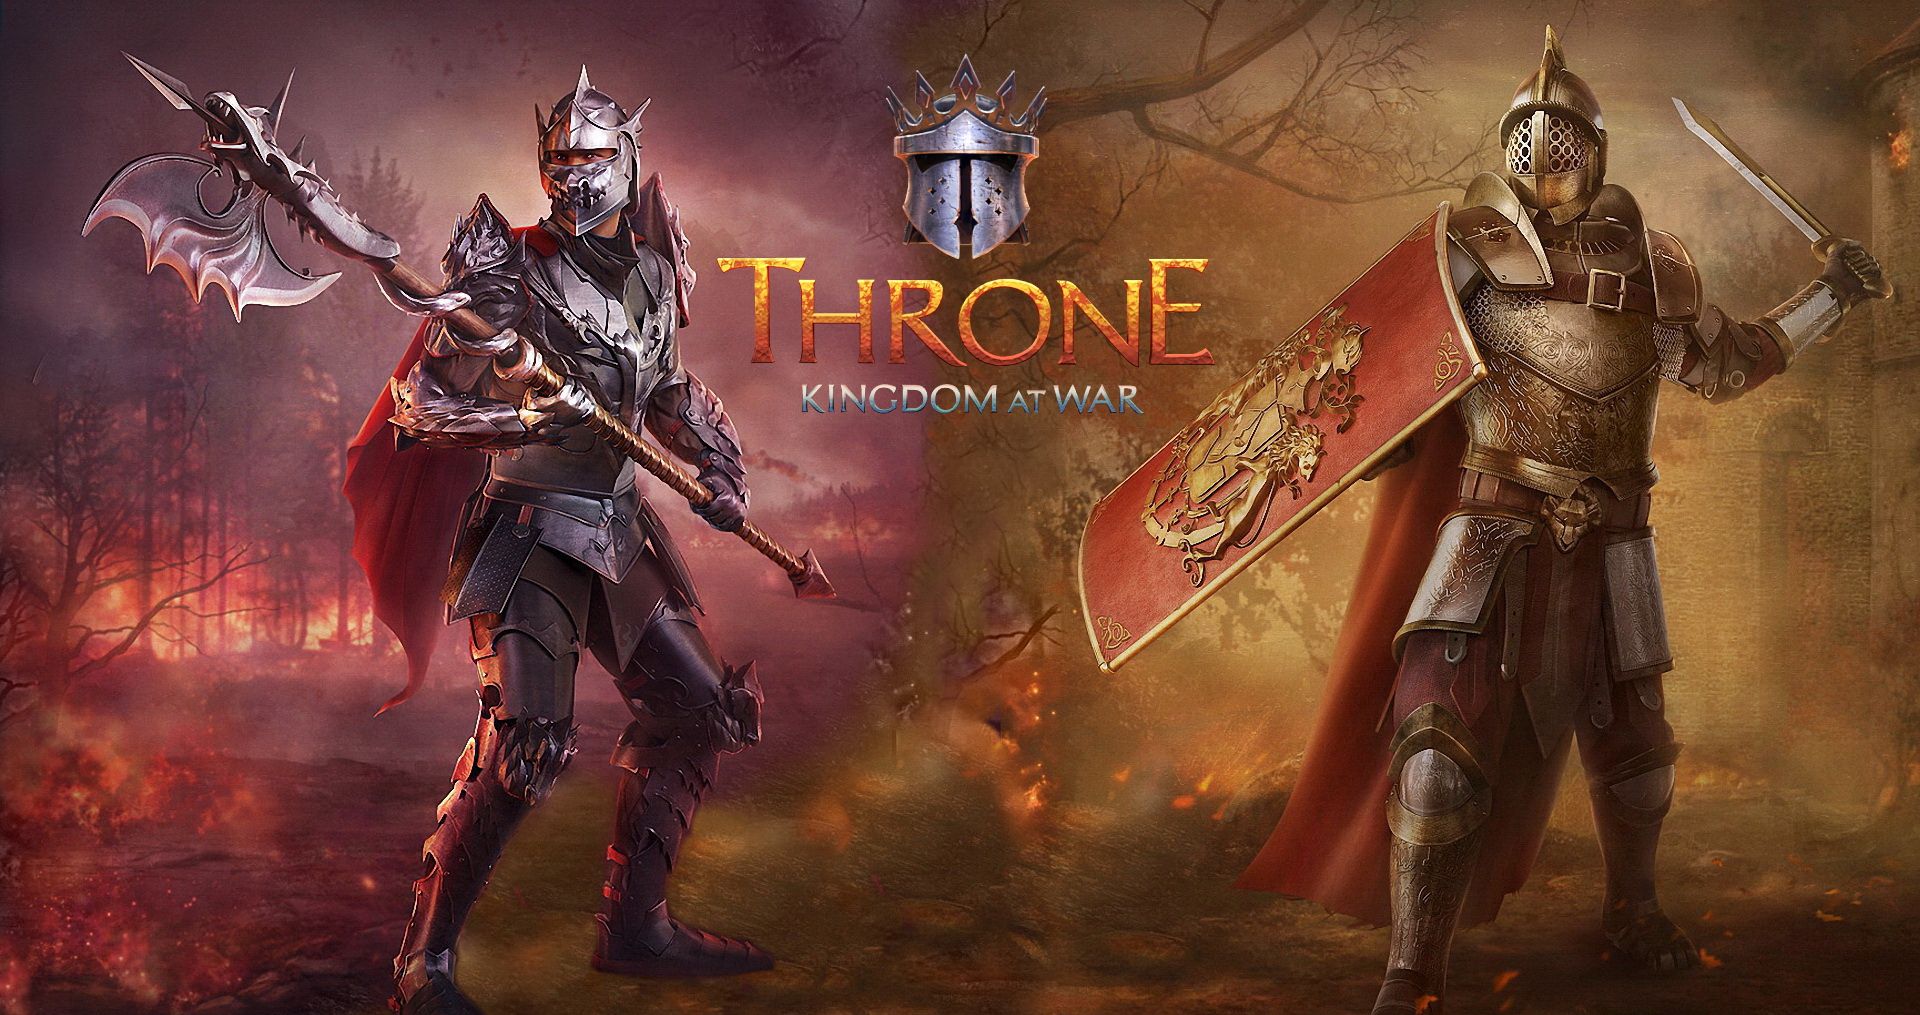 Throne: Kingdom at War gra strategiczna